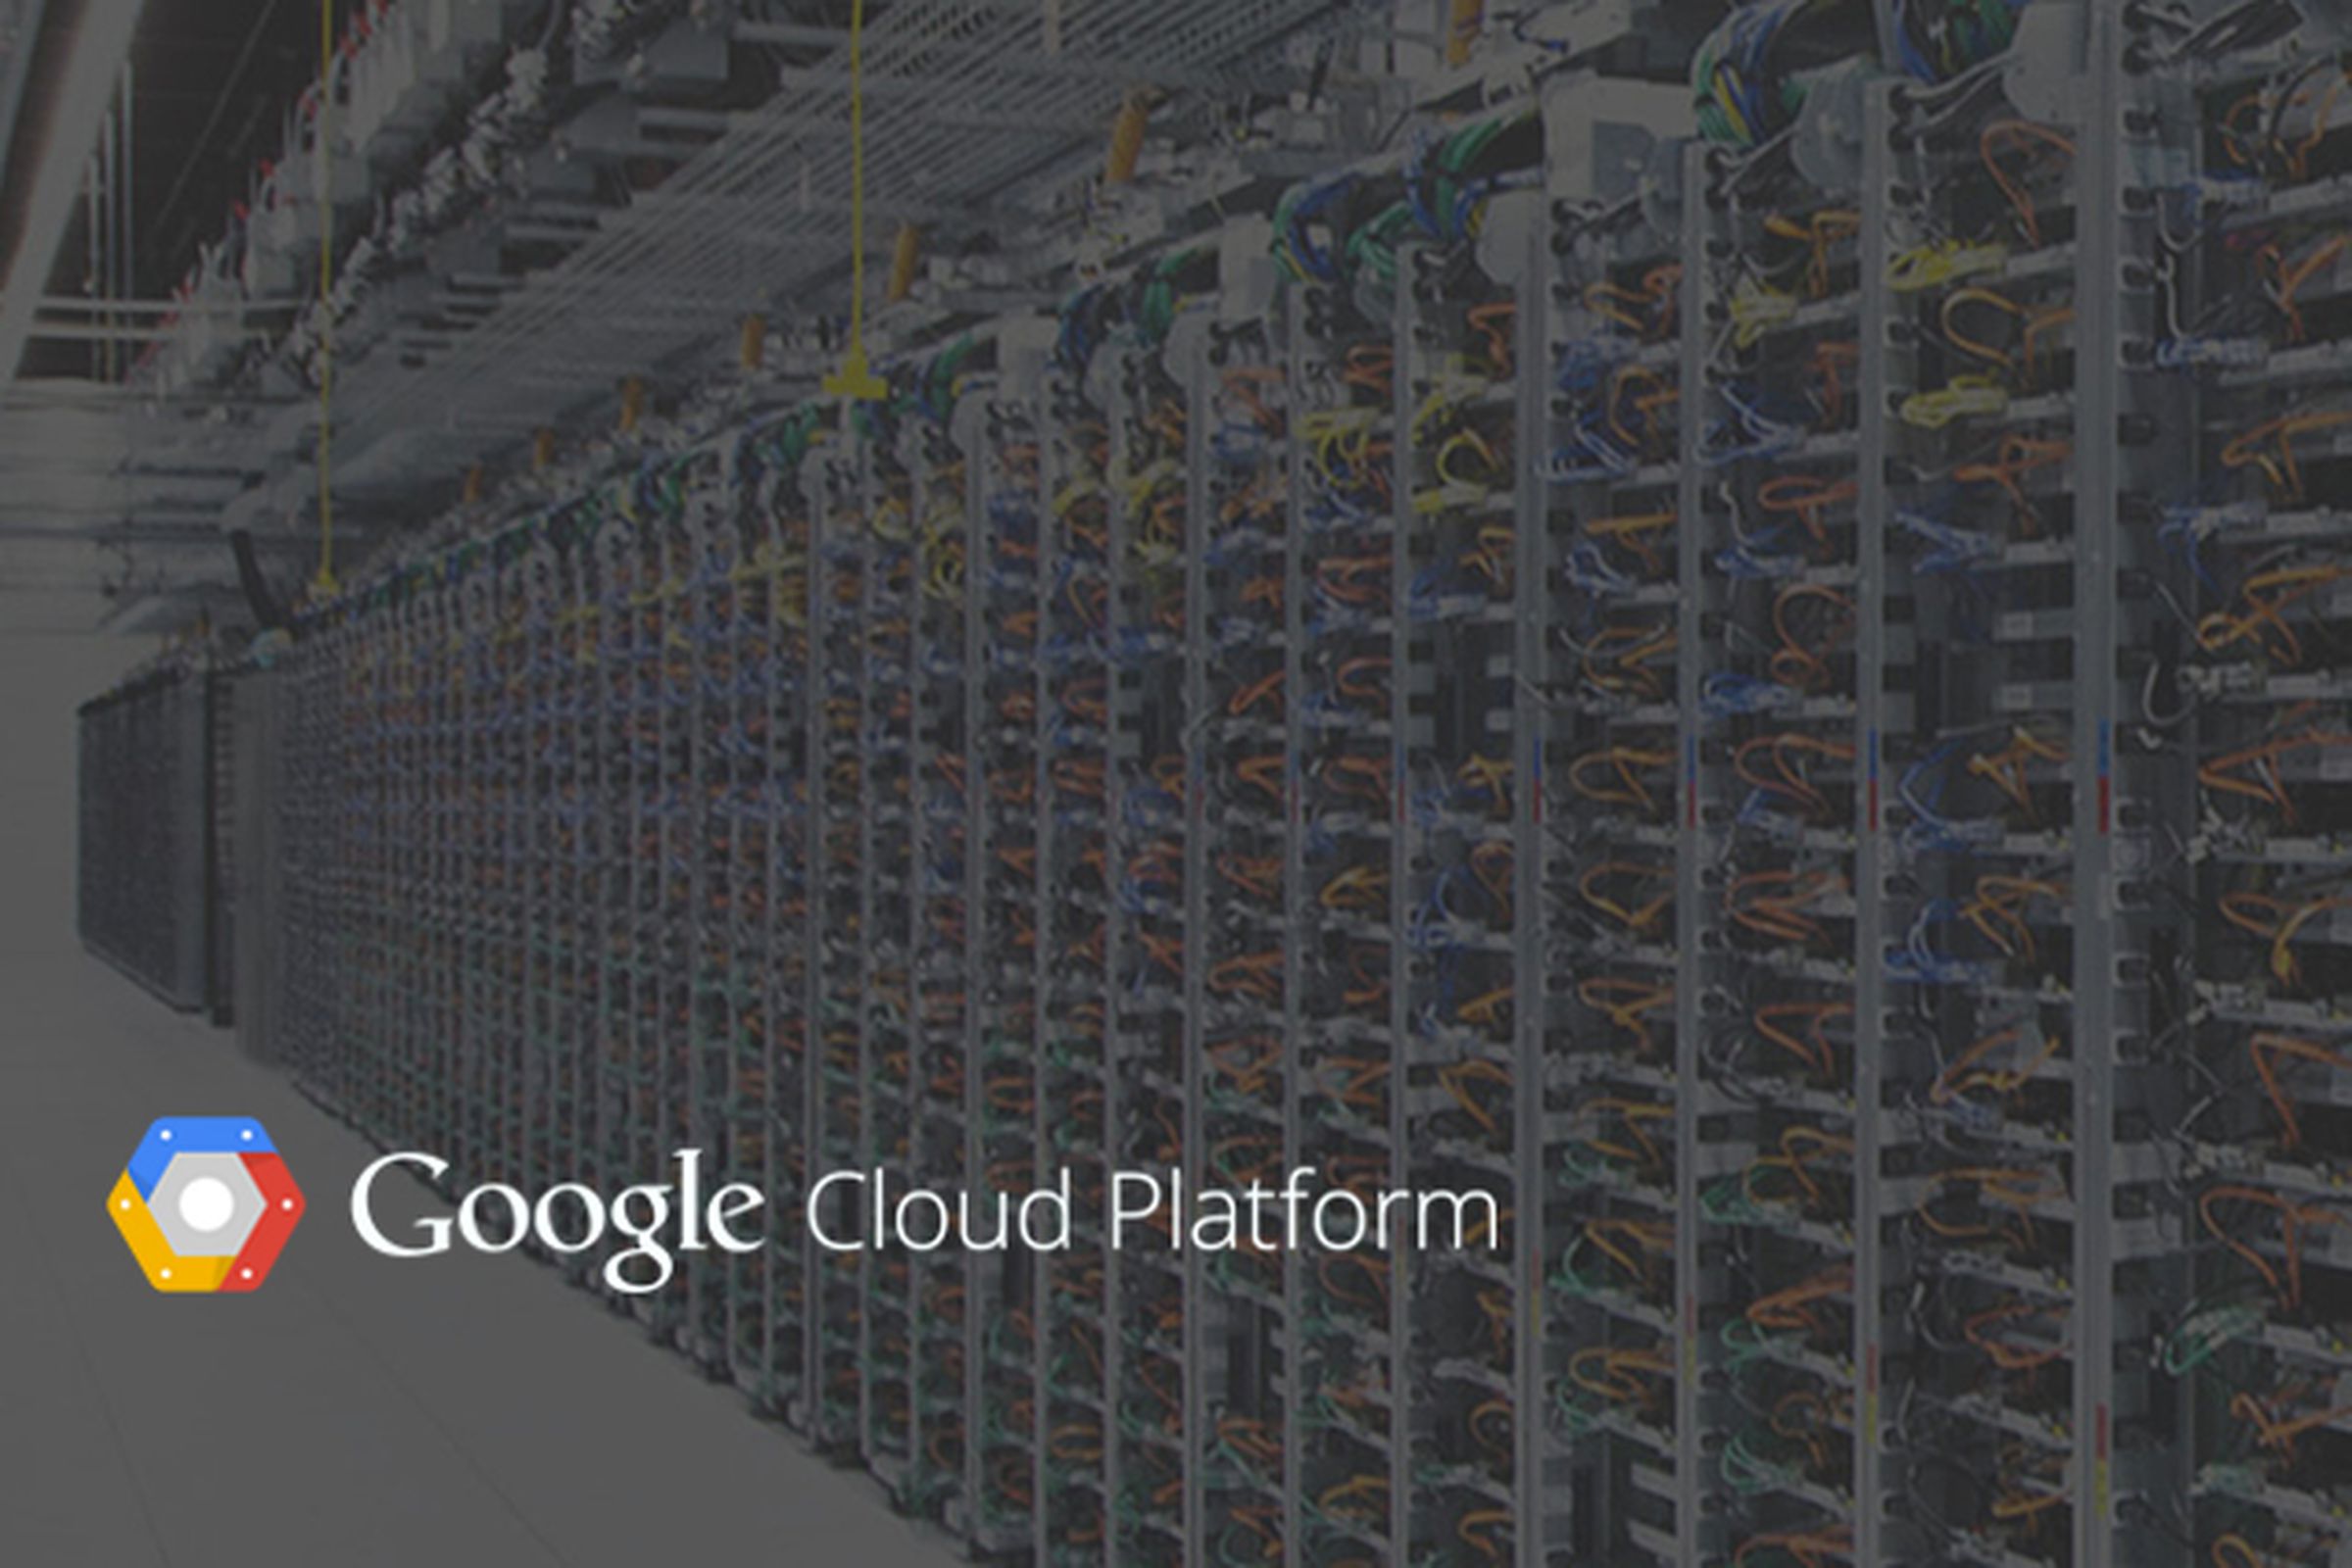 google cloud platform stock